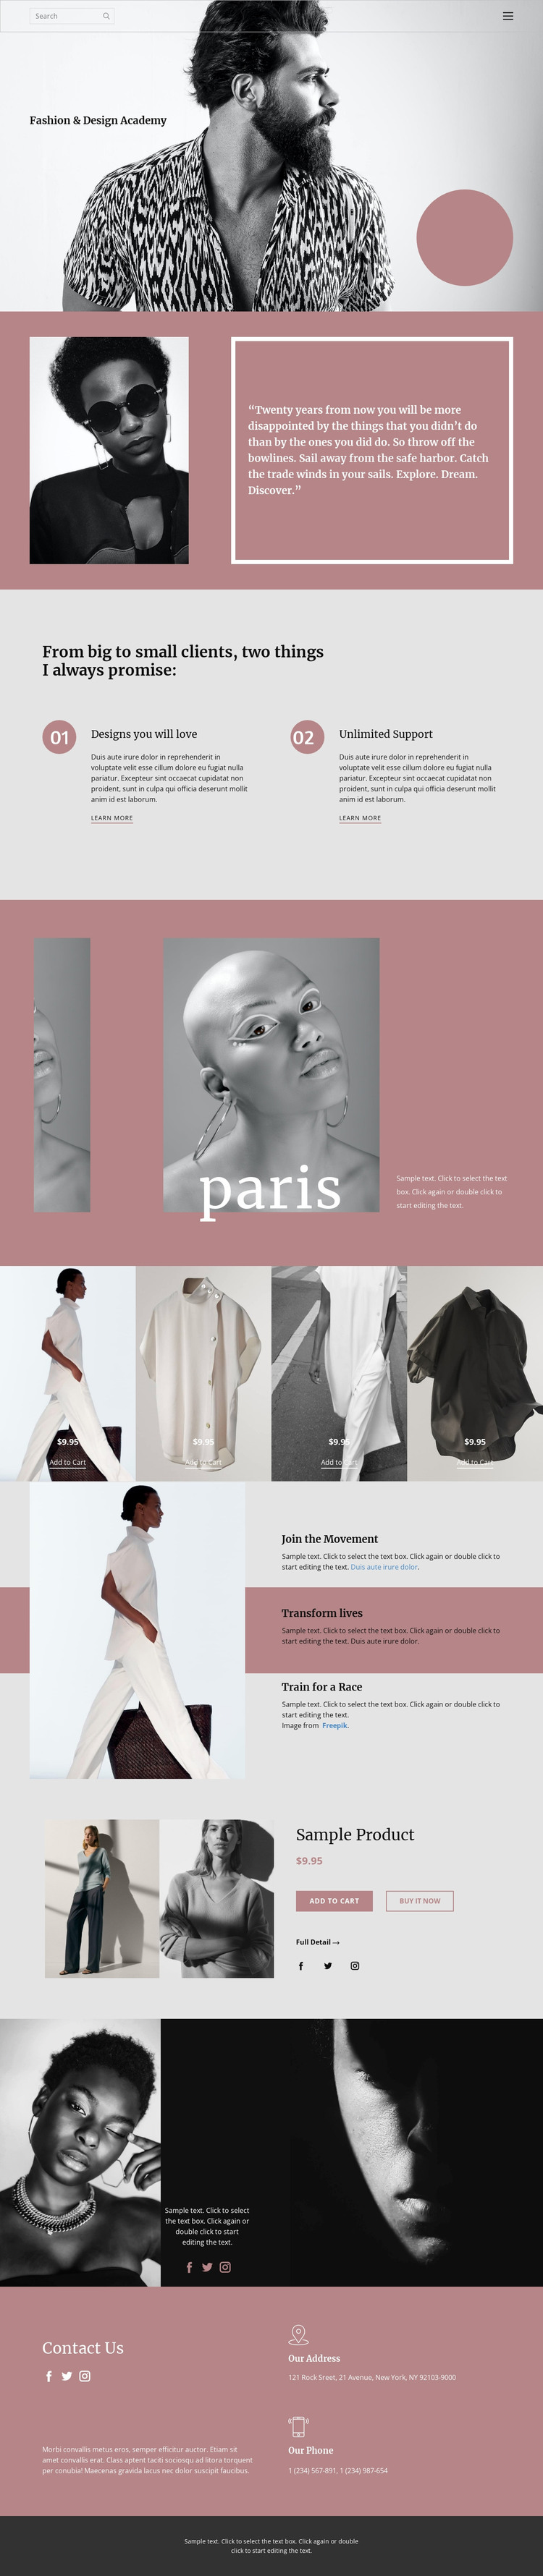 Fashion studio Web Design